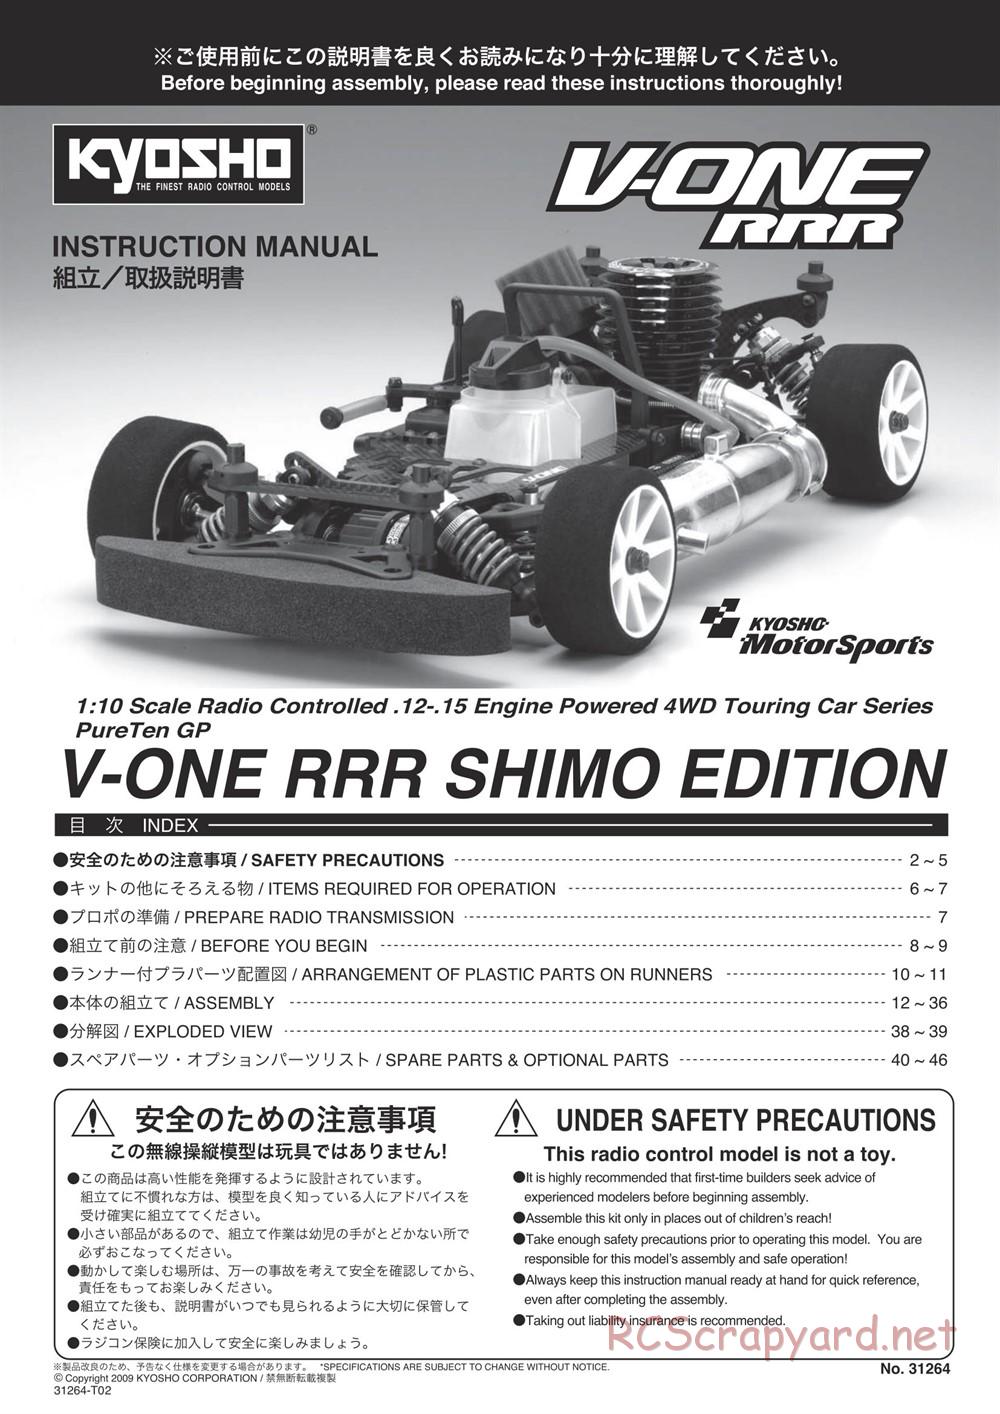 Kyosho - V-One RRR Shimo - Manual - Page 1